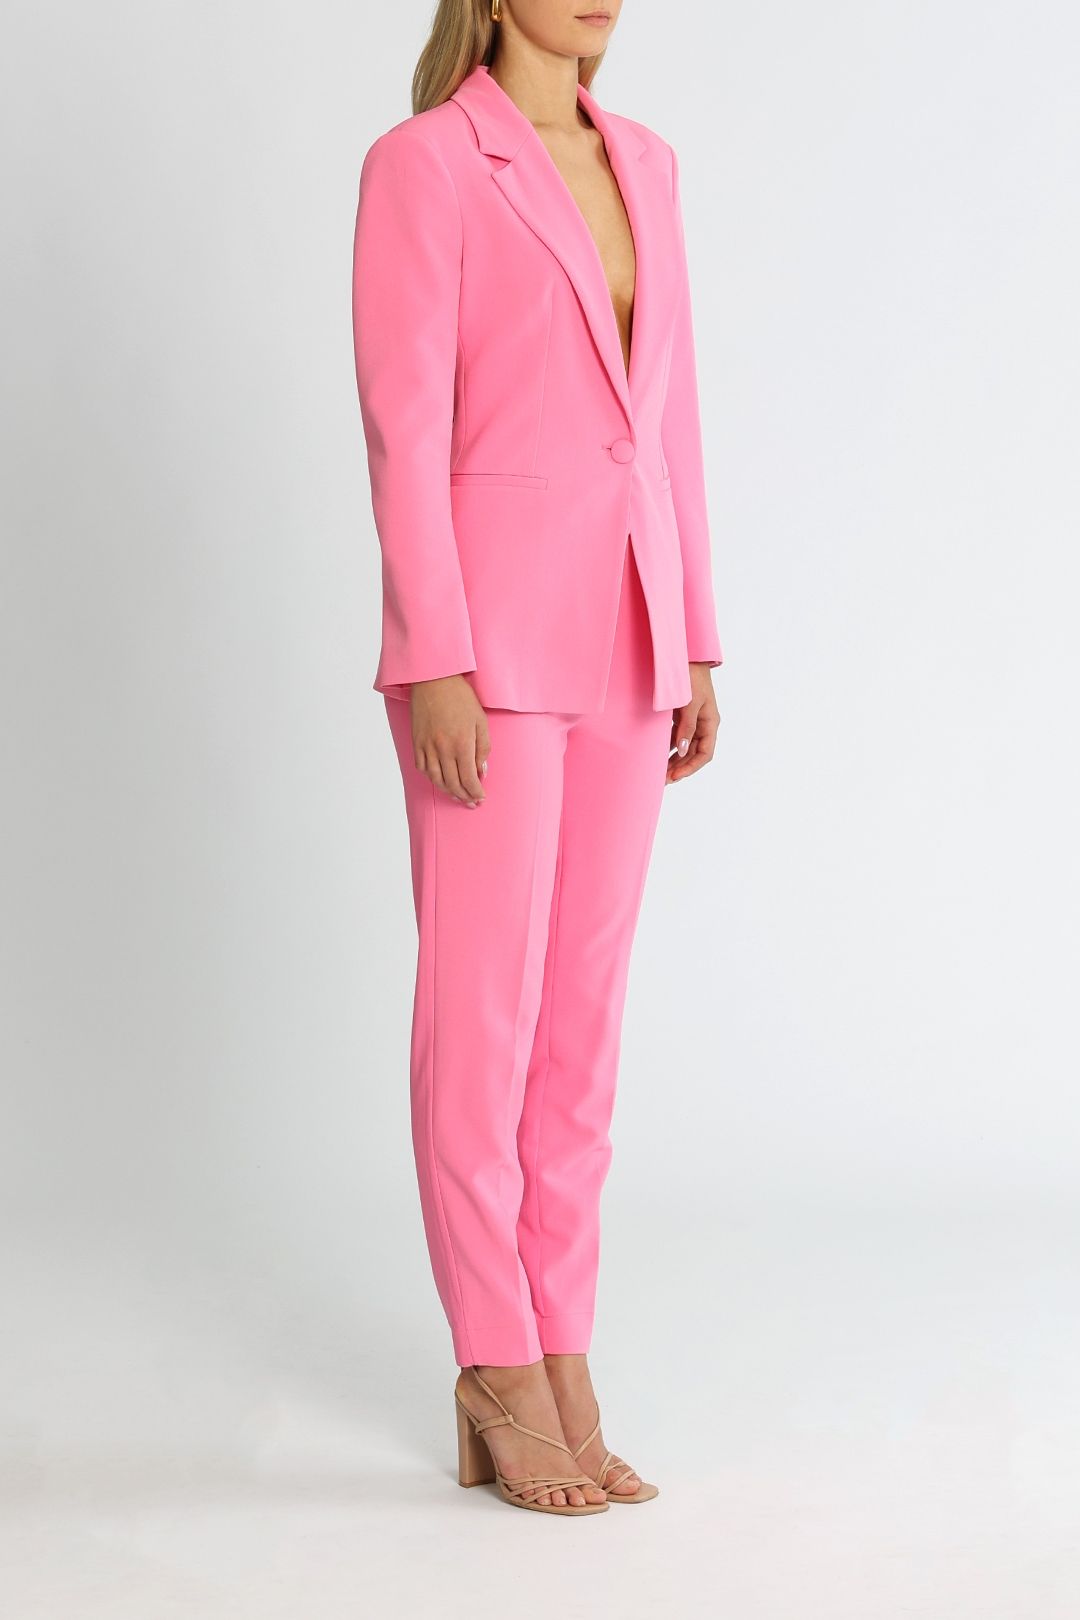 Setre Jasmine Suit Jacket and Pant Fuschia Pink